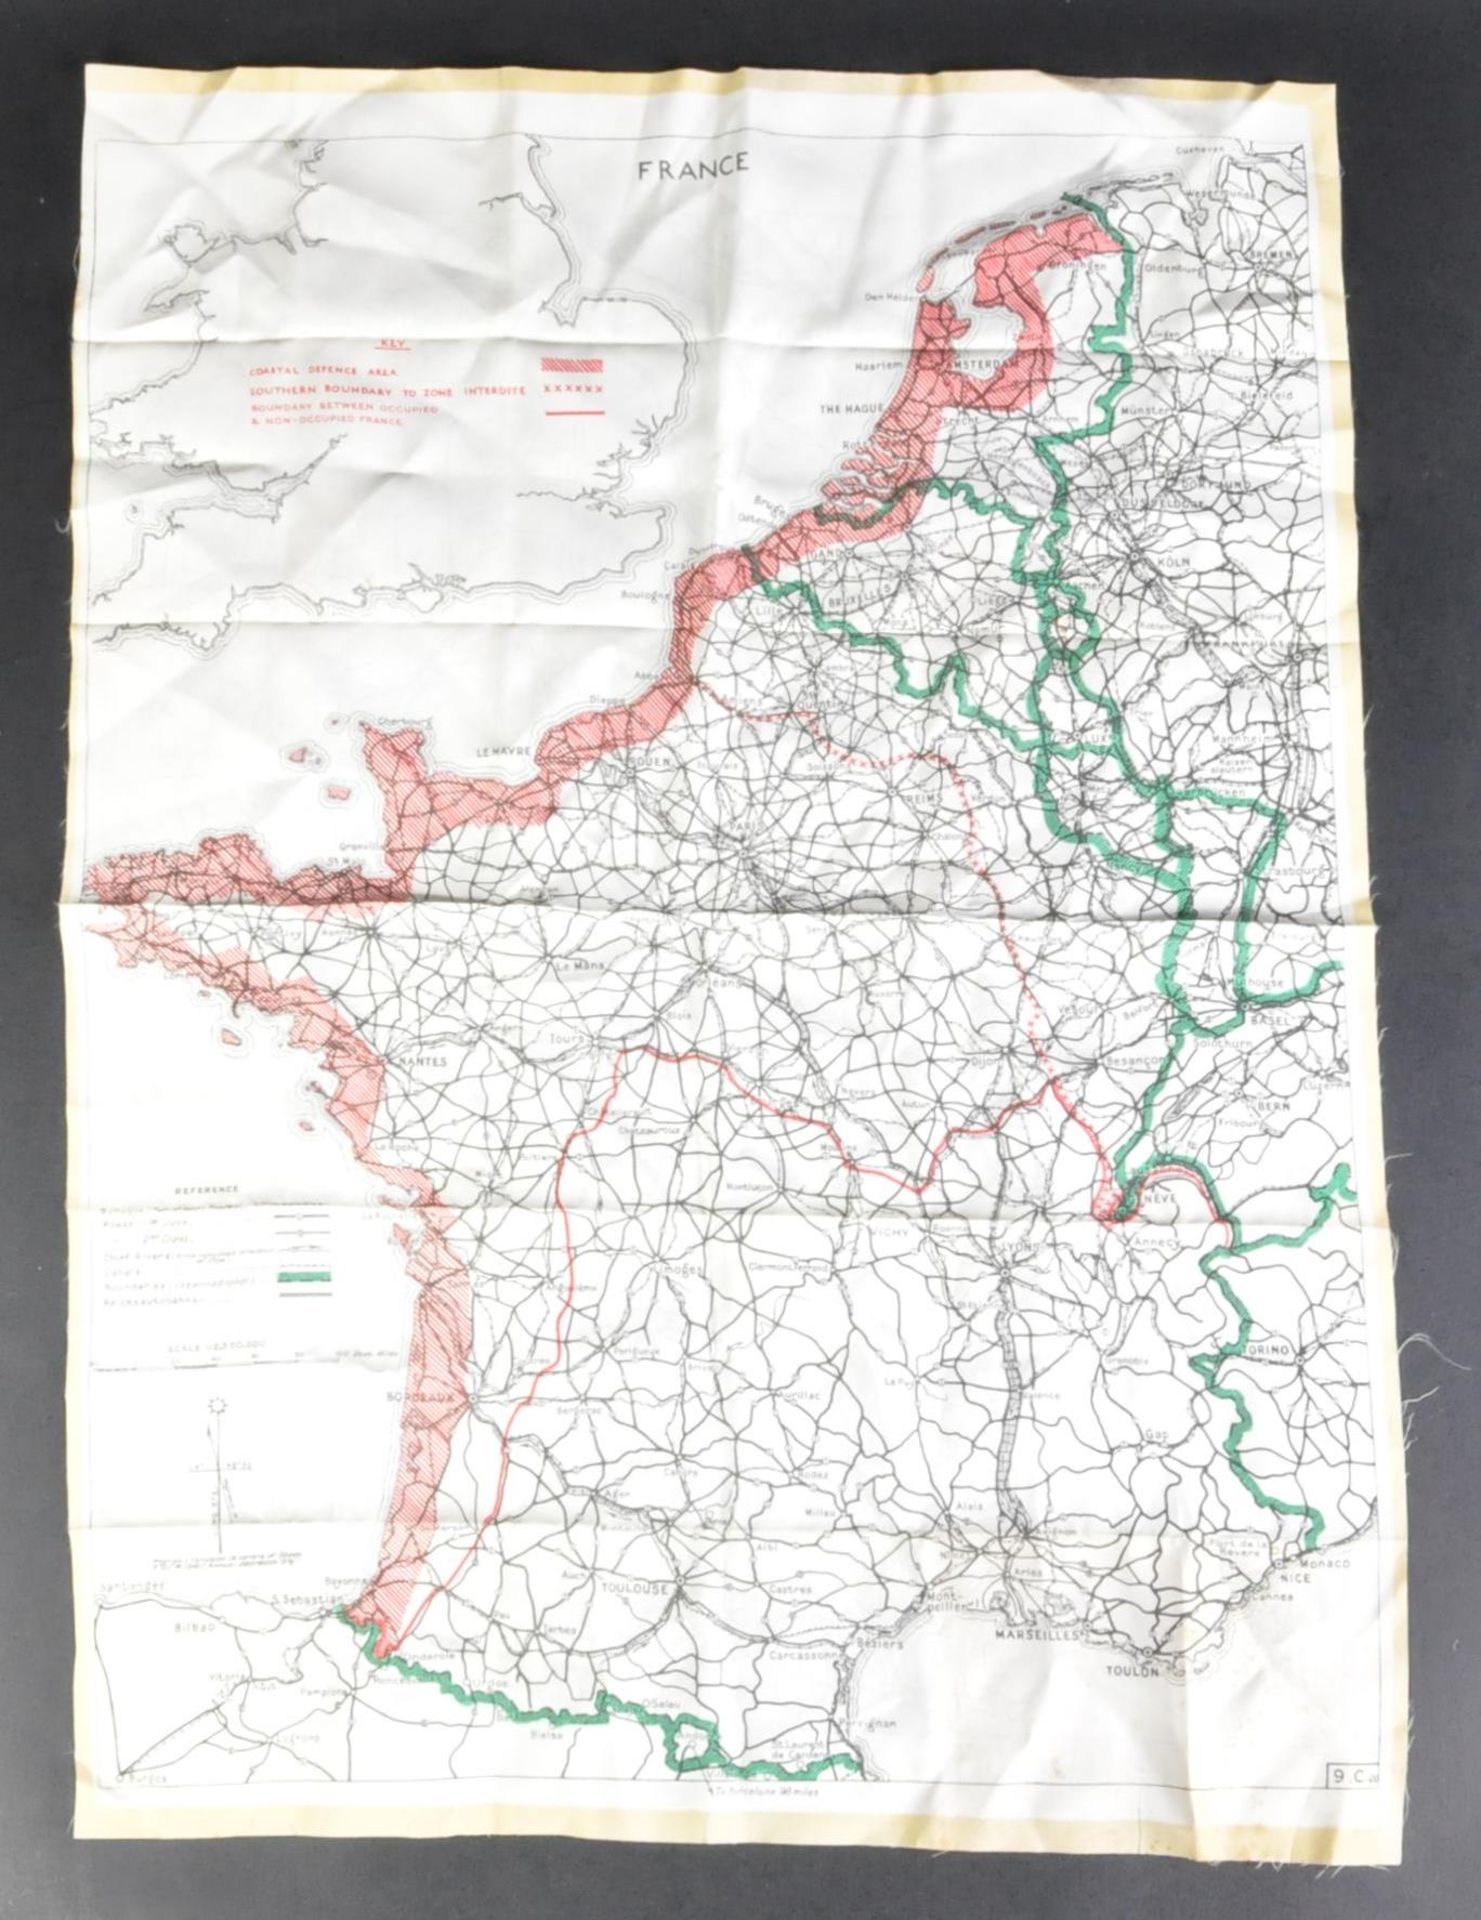 WWII SECOND WORLD WAR INTEREST - SILK ESCAPE MAP OF FRANCE